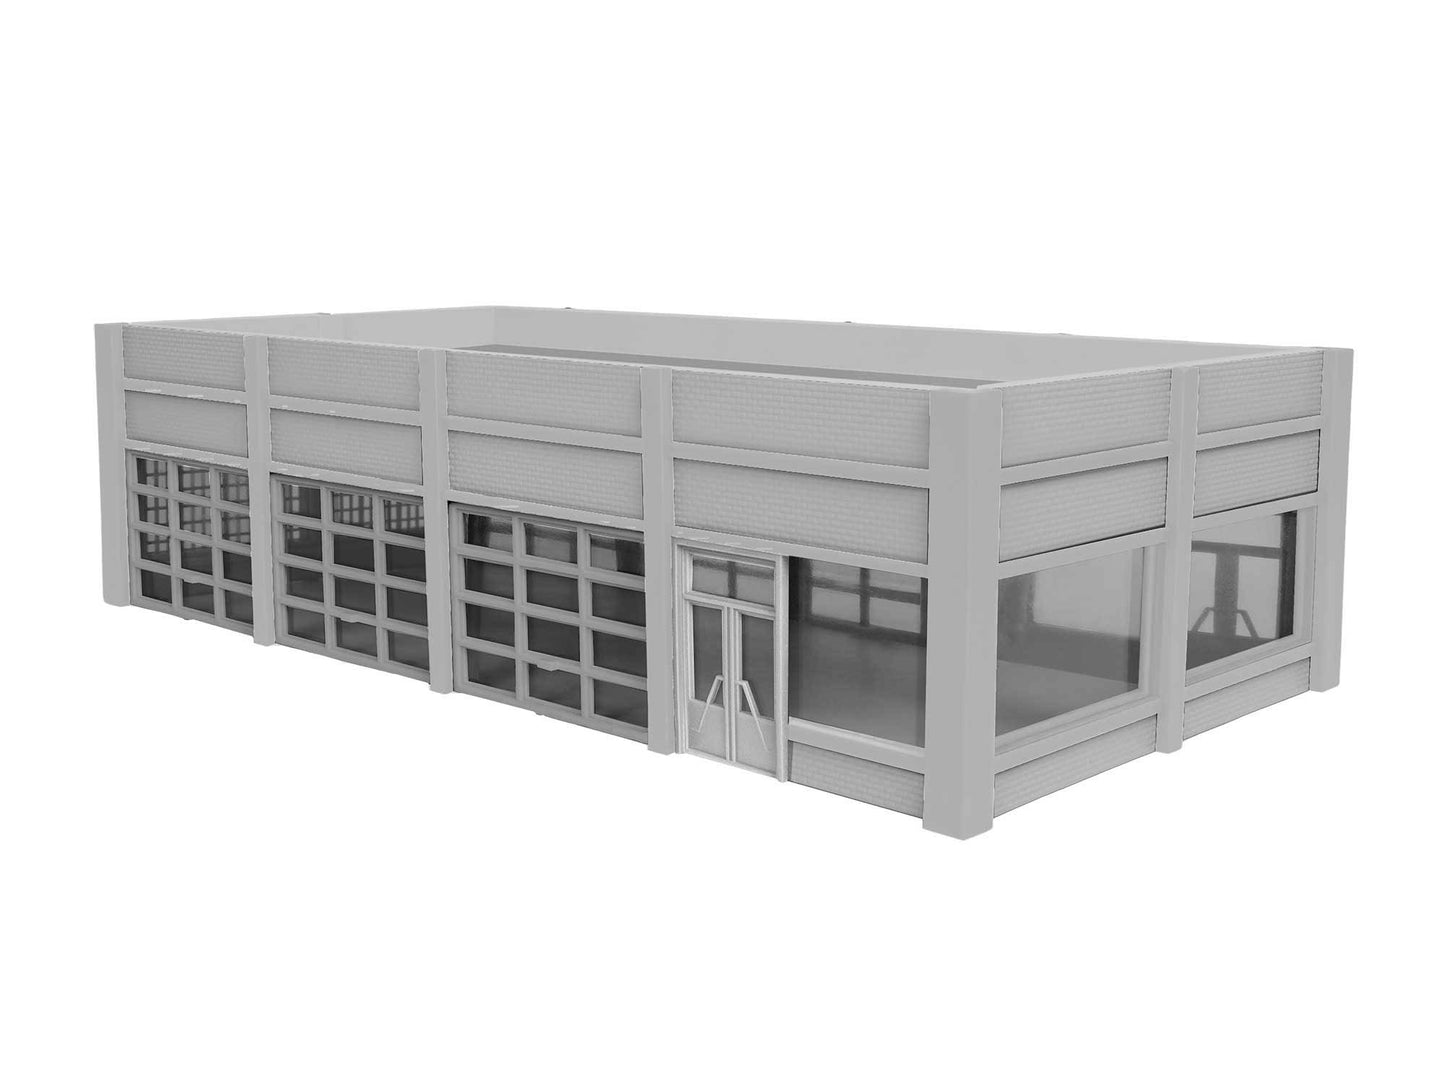 Lionel 2067060 HO Sevice Station Building Kit